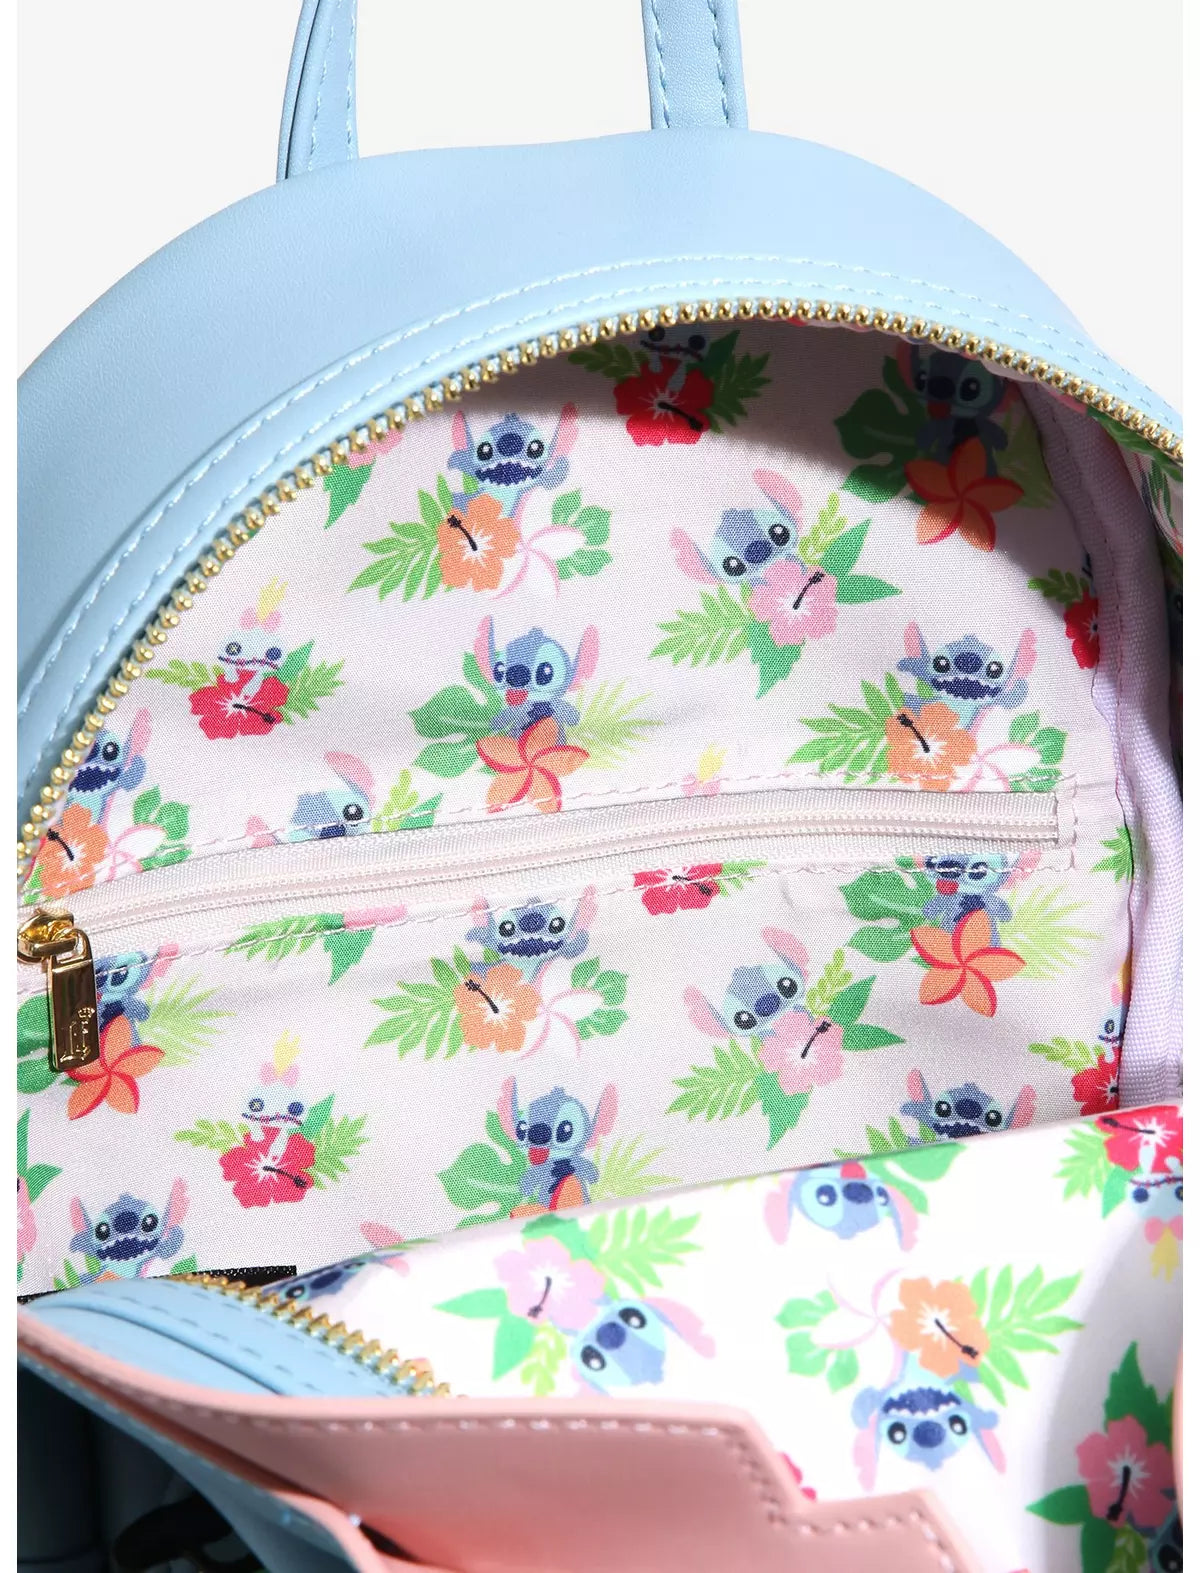 Loungefly Disney Lilo & Stitch Luau Stitch Mini Backpack